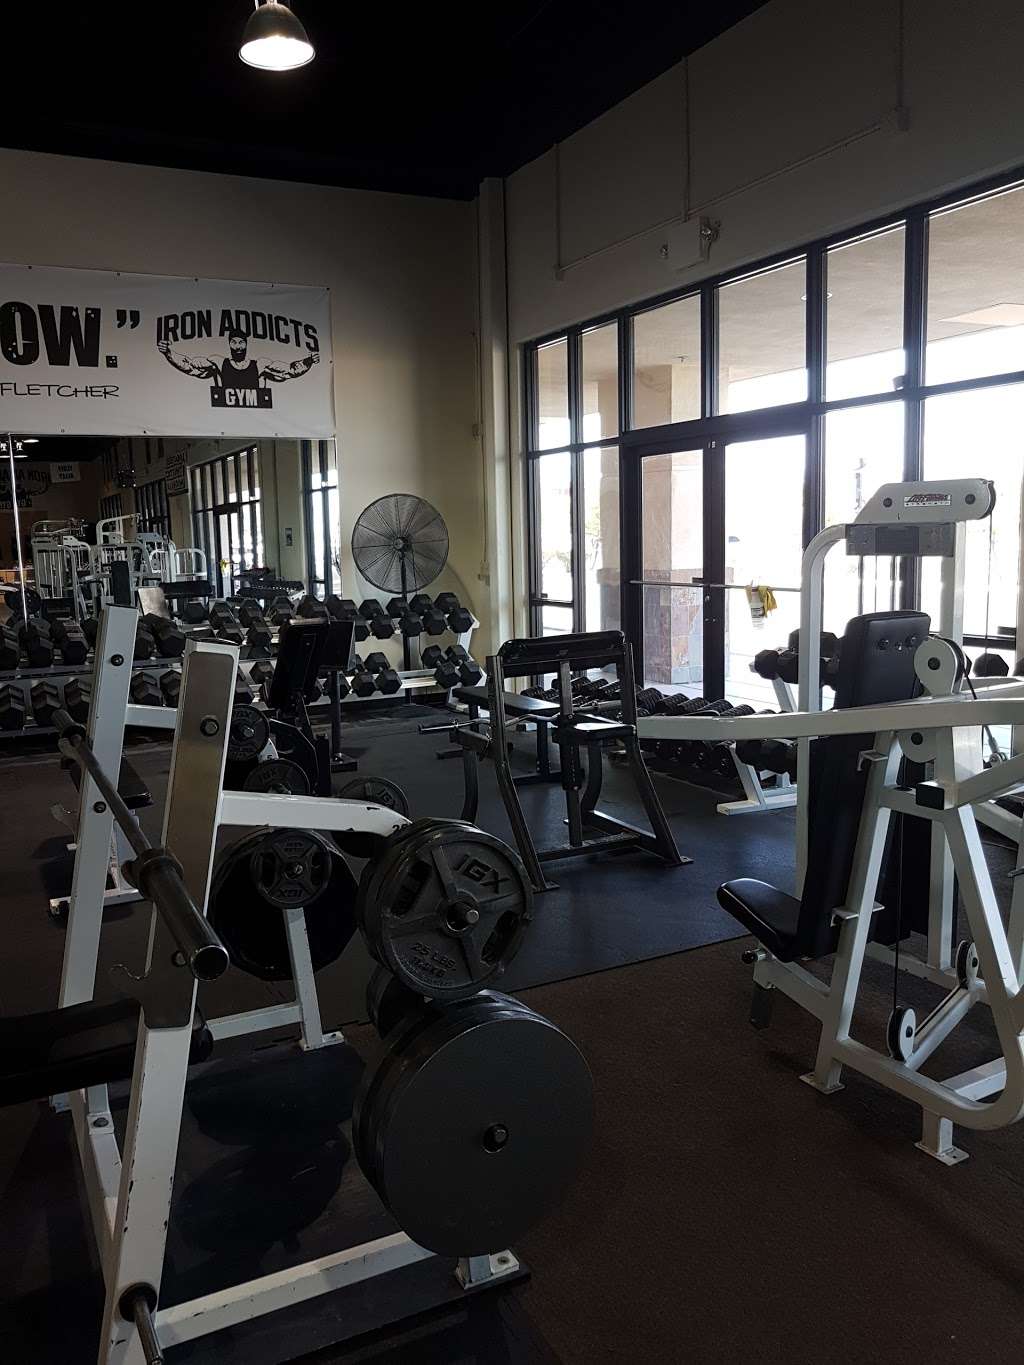 Iron Addicts Gym - Las Vegas | 6230 S Decatur Blvd, Las Vegas, NV 89118 | Phone: (702) 690-3041